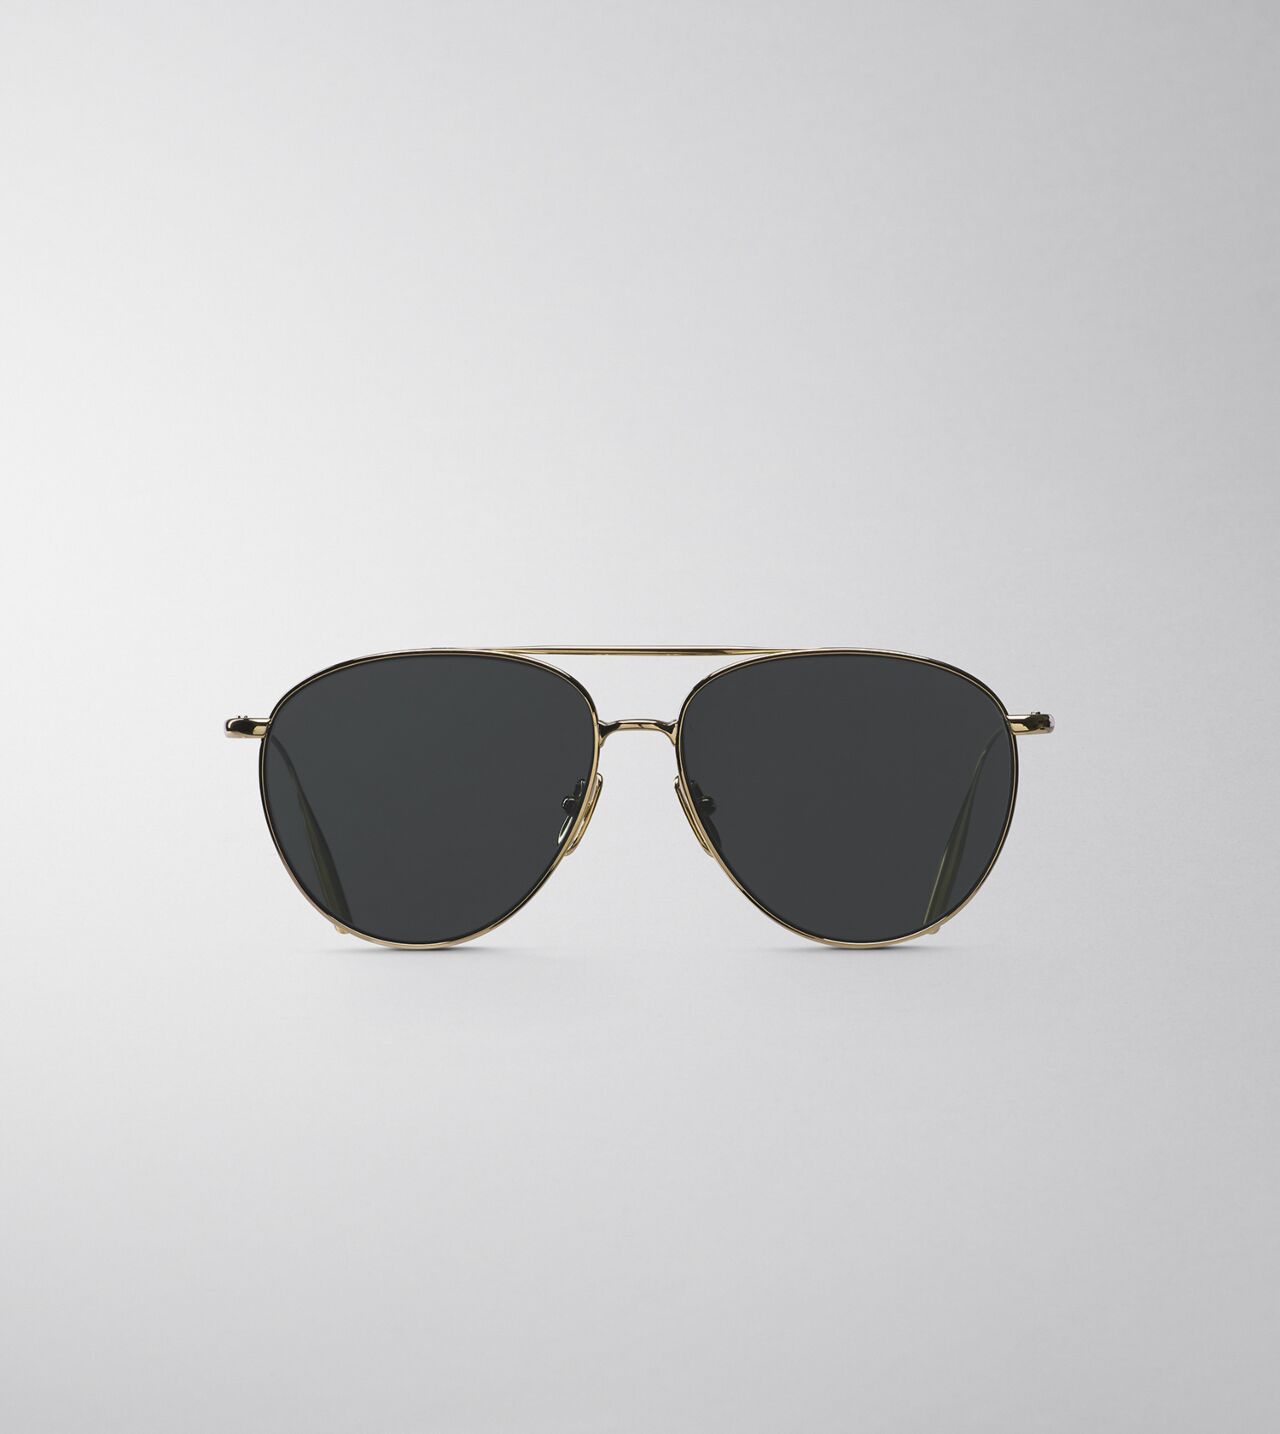 Niiro Sunglasses in Gold grey